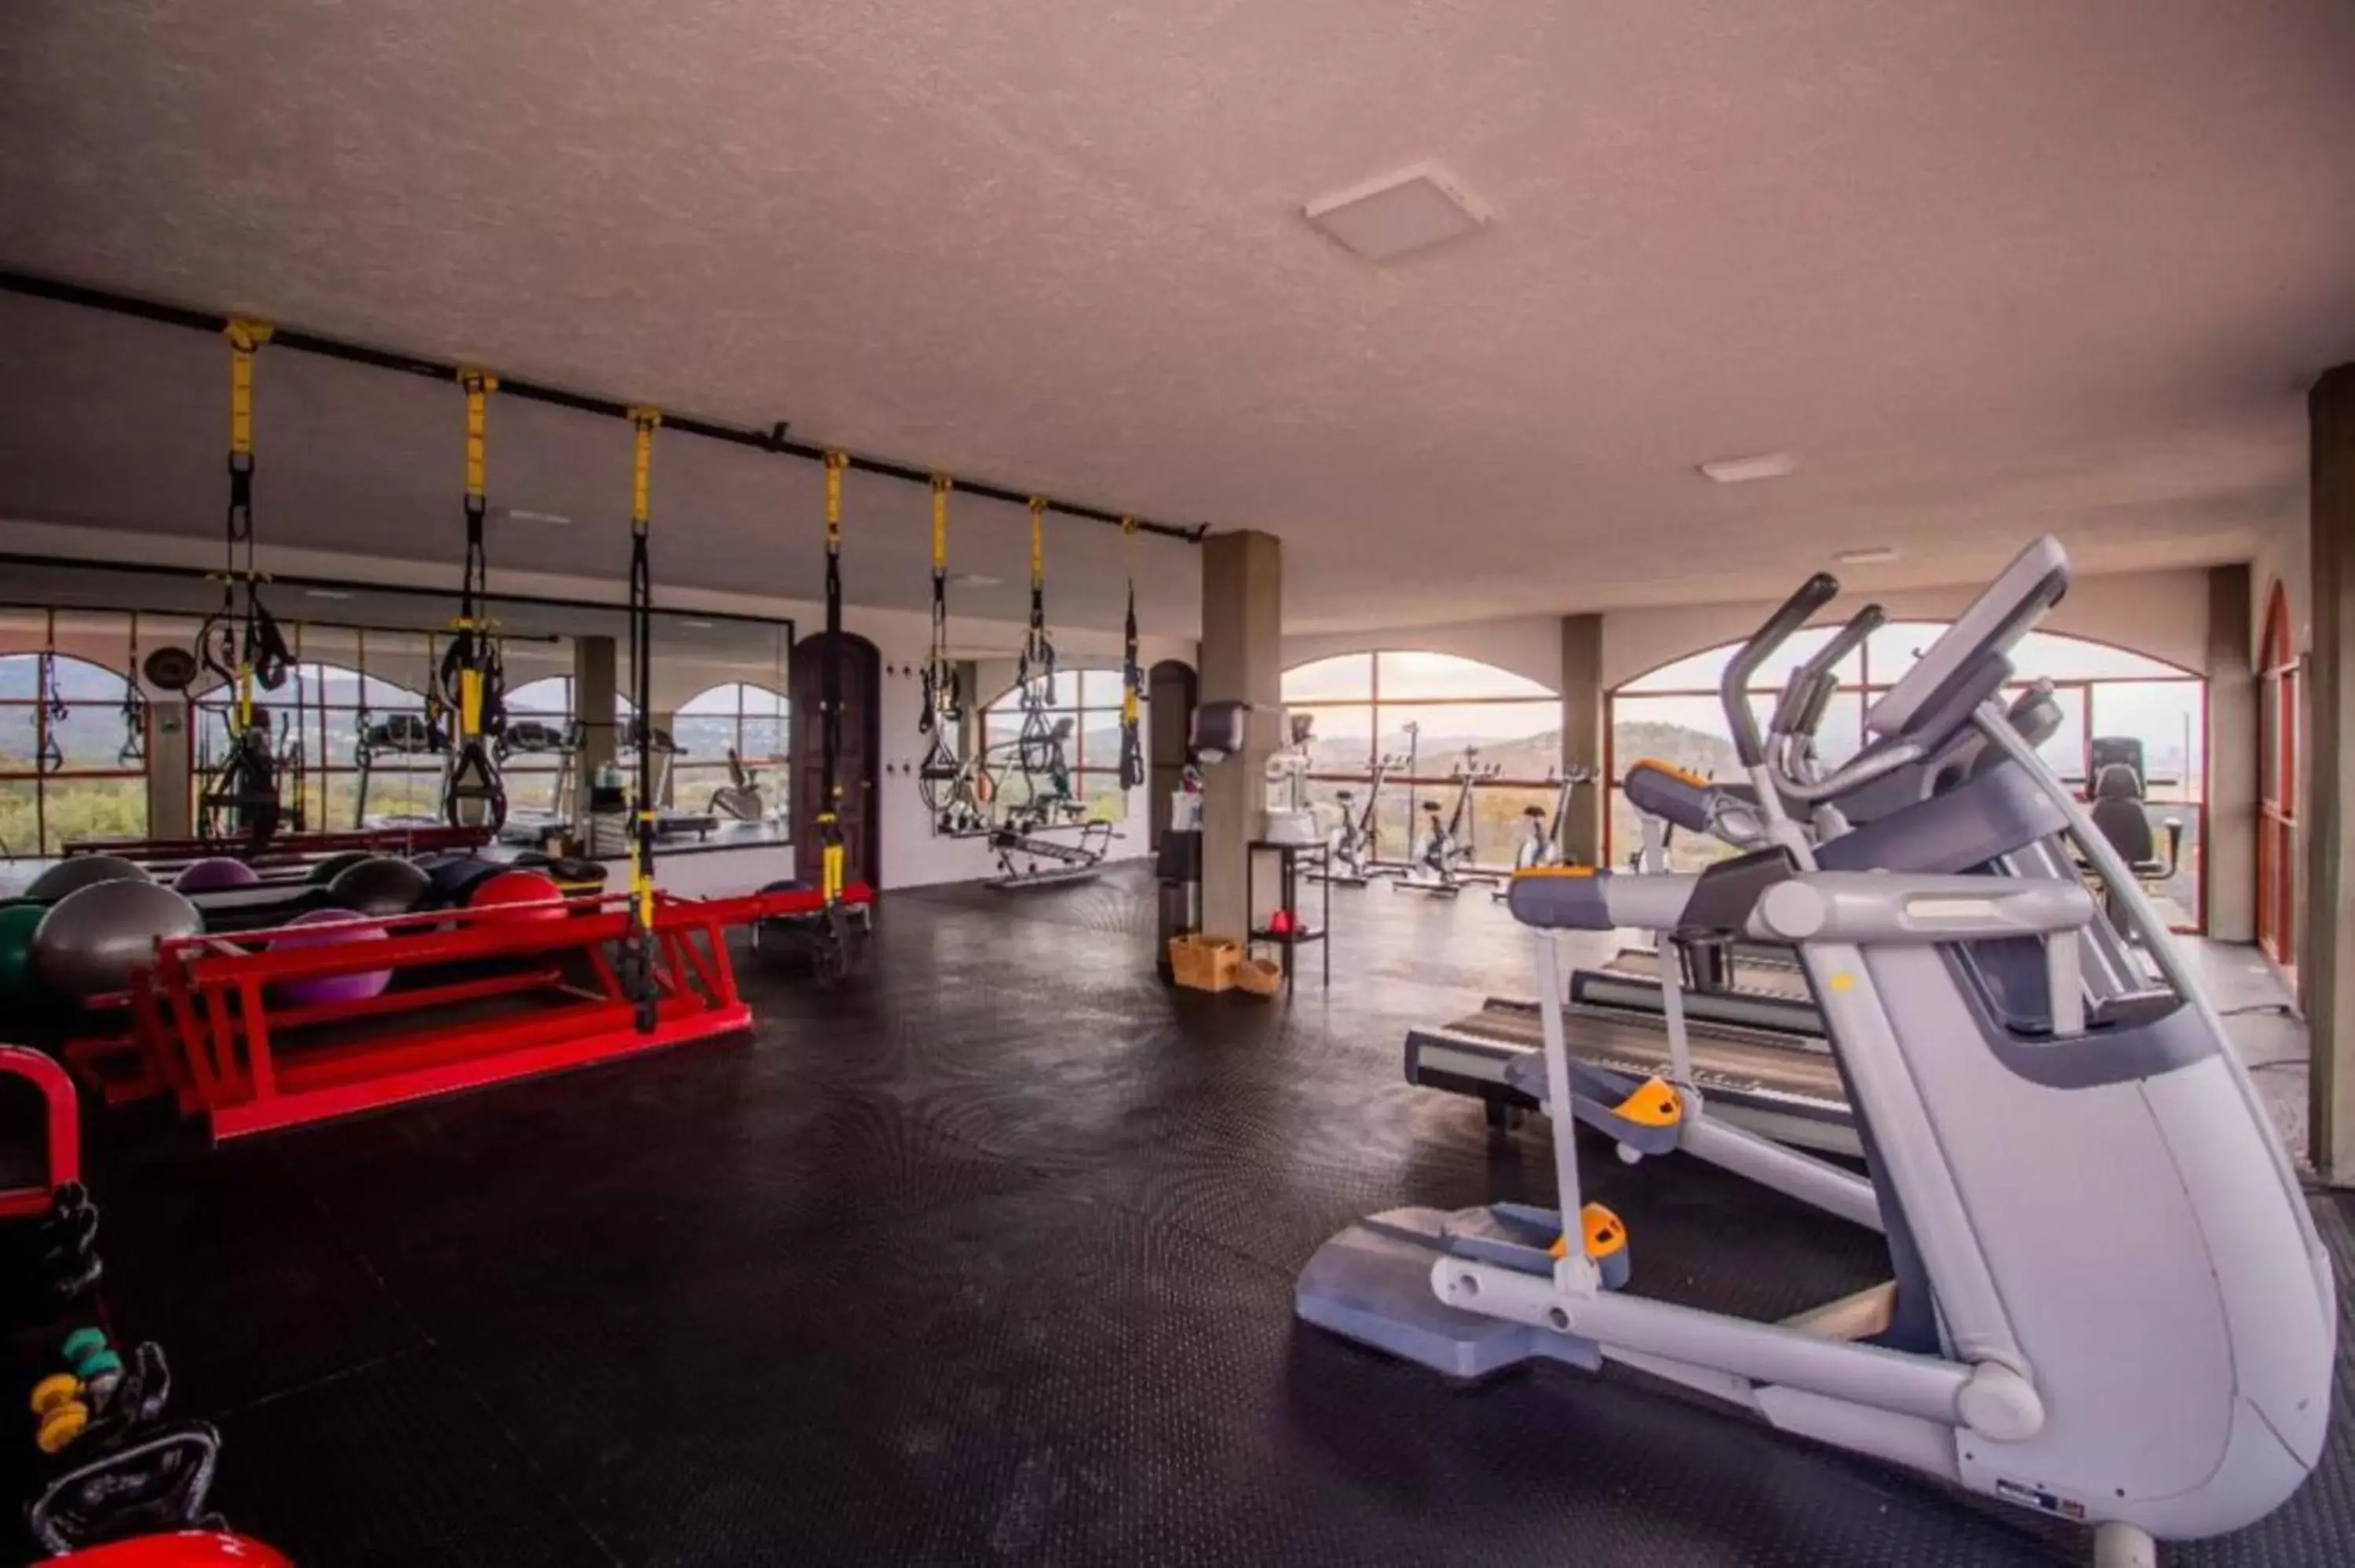 Fitness centre/facilities, Fitness Center/Facilities in Collection O Hotel Nueva Escocia, Puebla